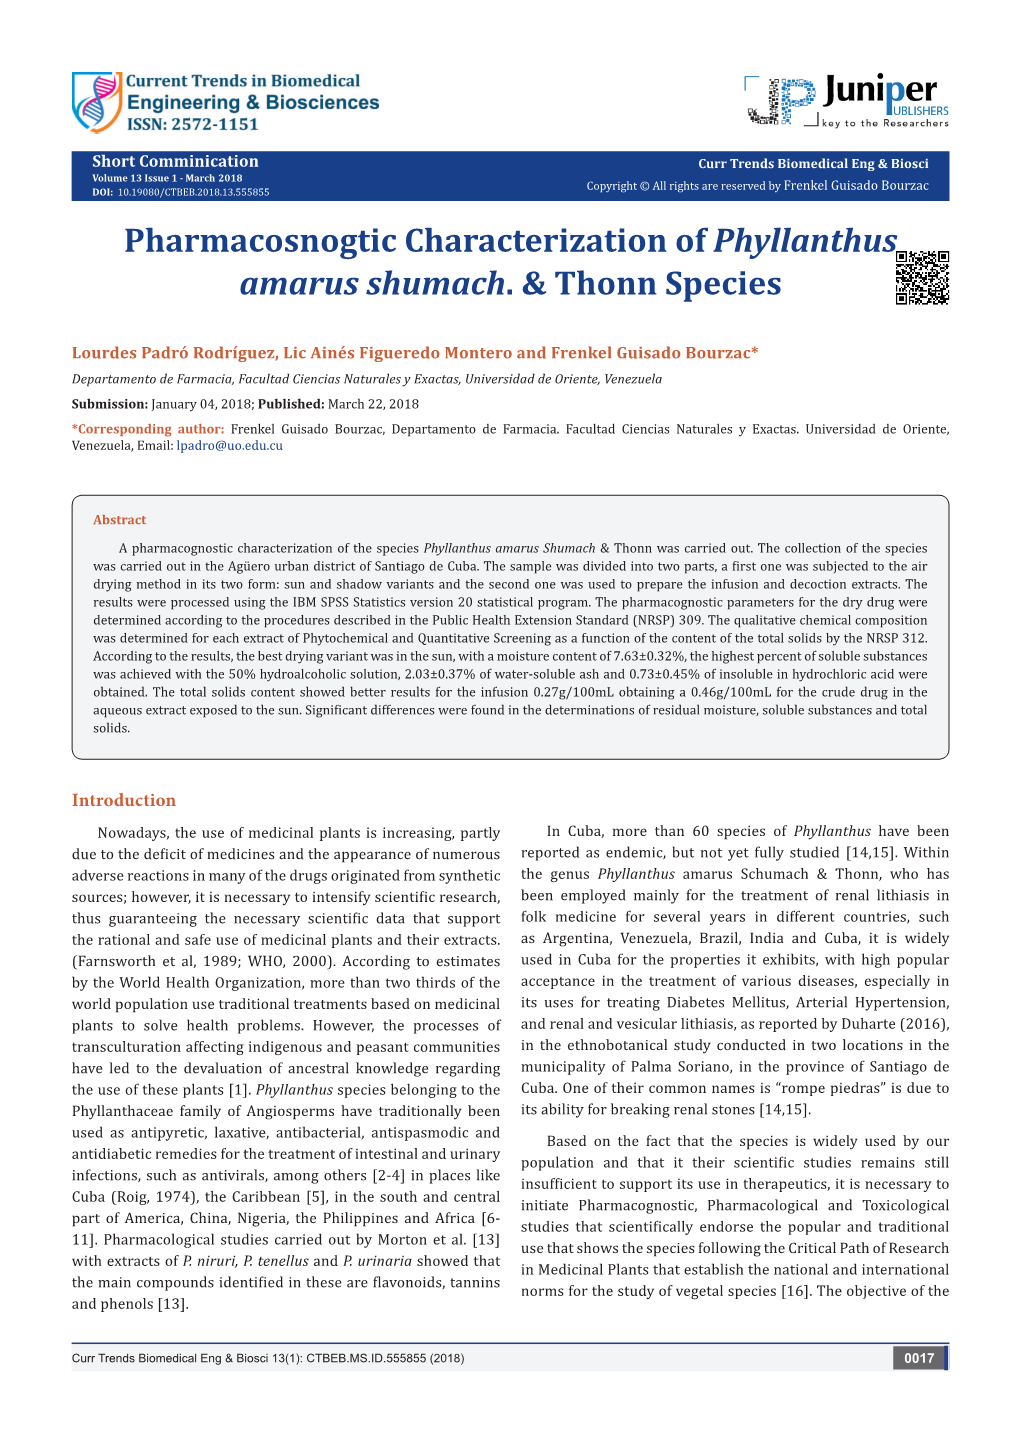 Pharmacosnogtic Characterization of Phyllanthus Amarus Shumach